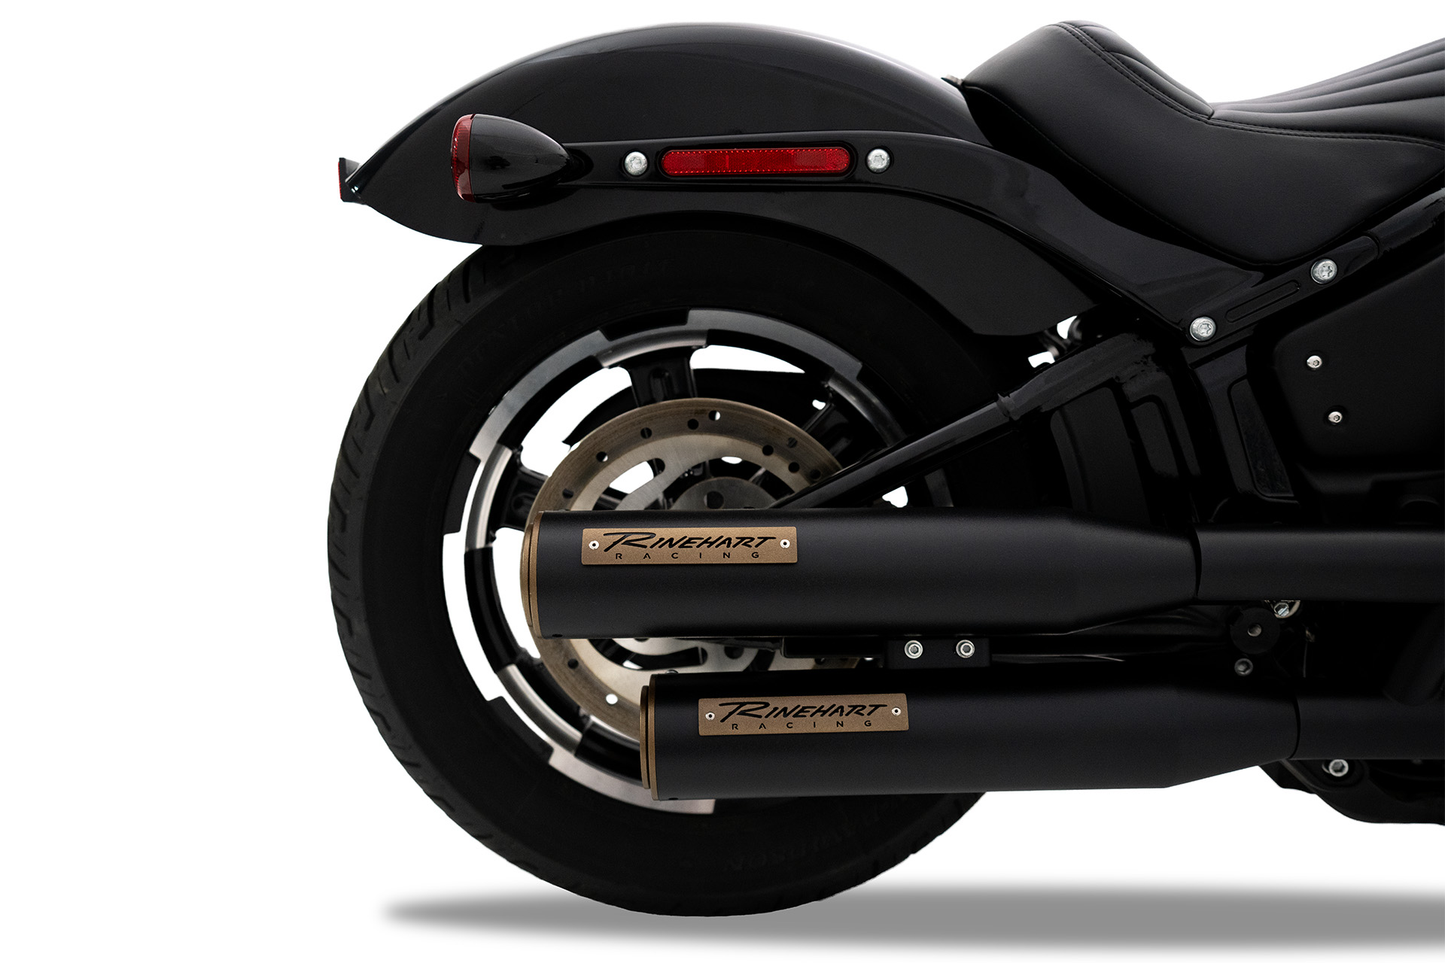 Silenziatori HP35 slip-on di 3,5 "per Harley Davidson